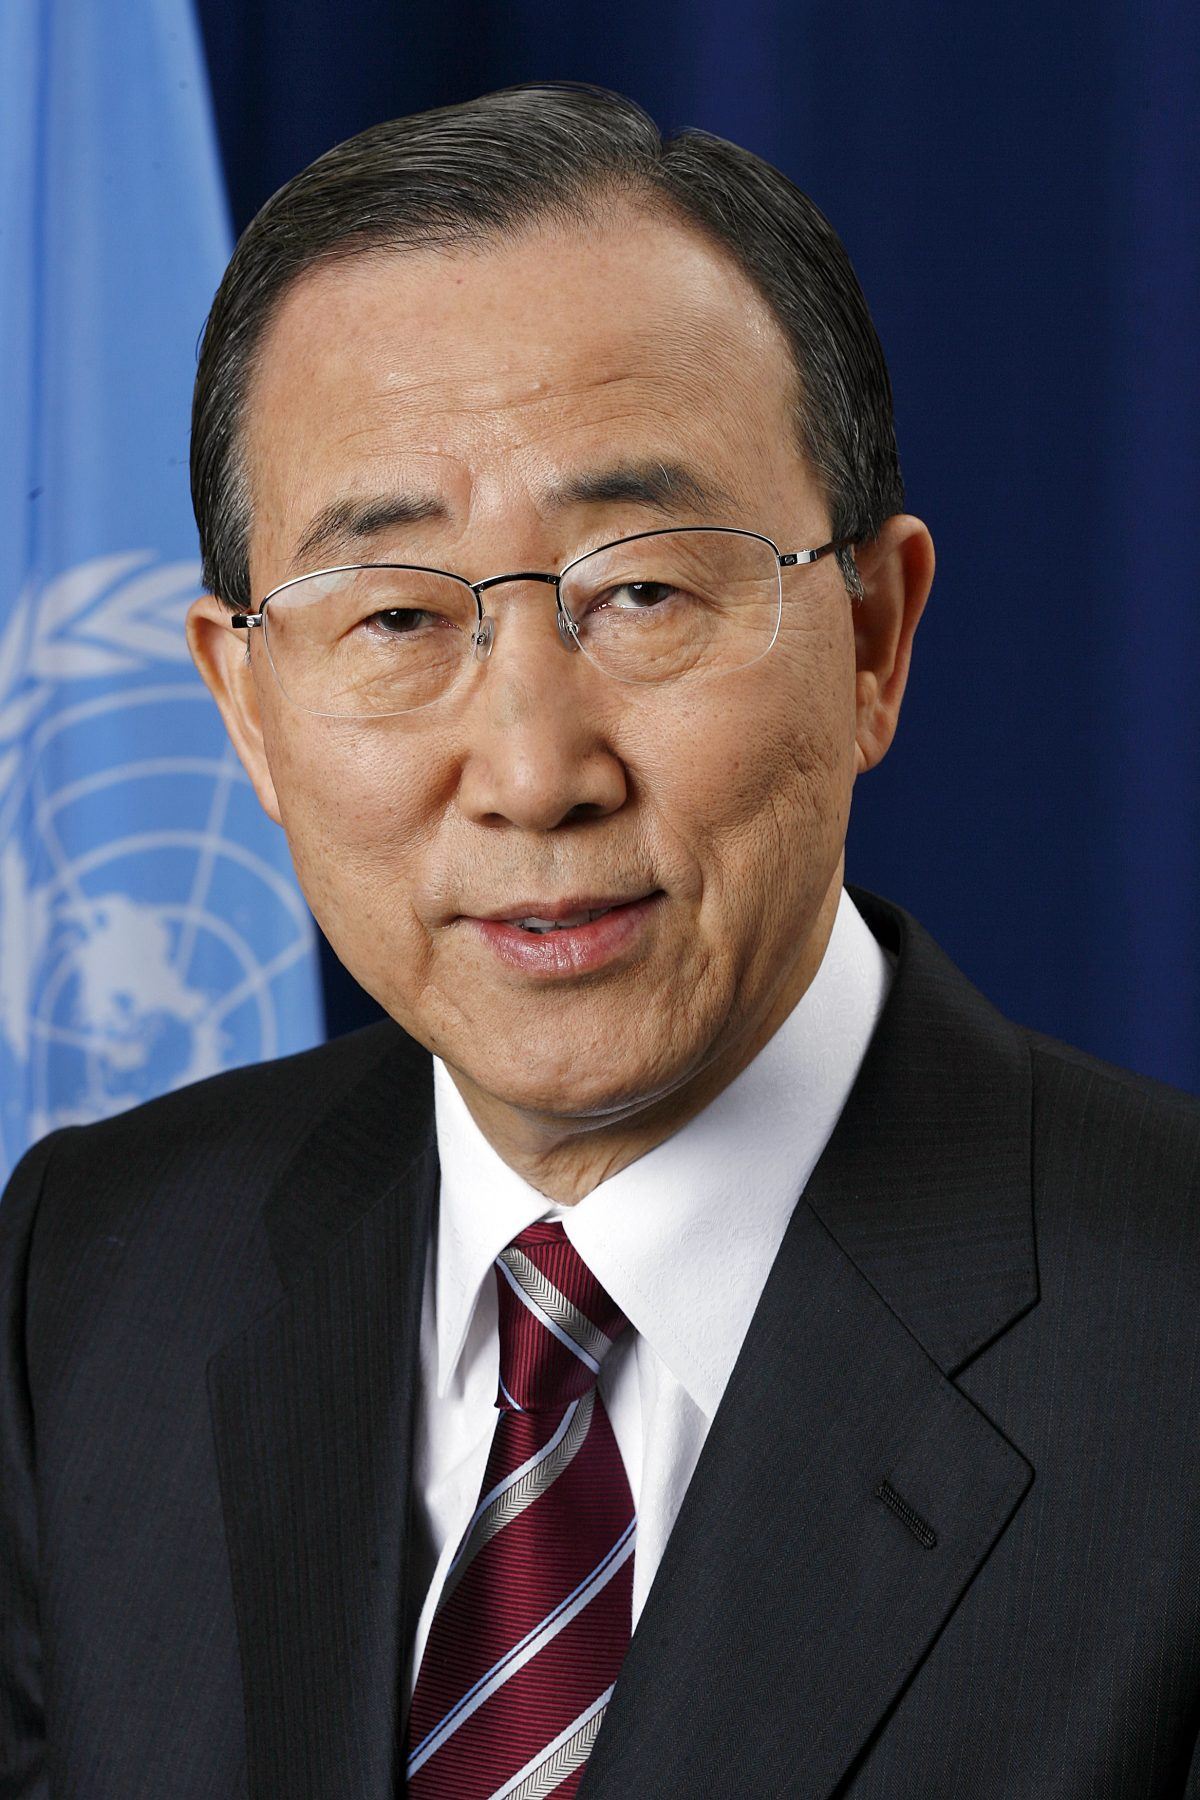 Ban Ki-moon, 8th Secretary-General of the United Nations